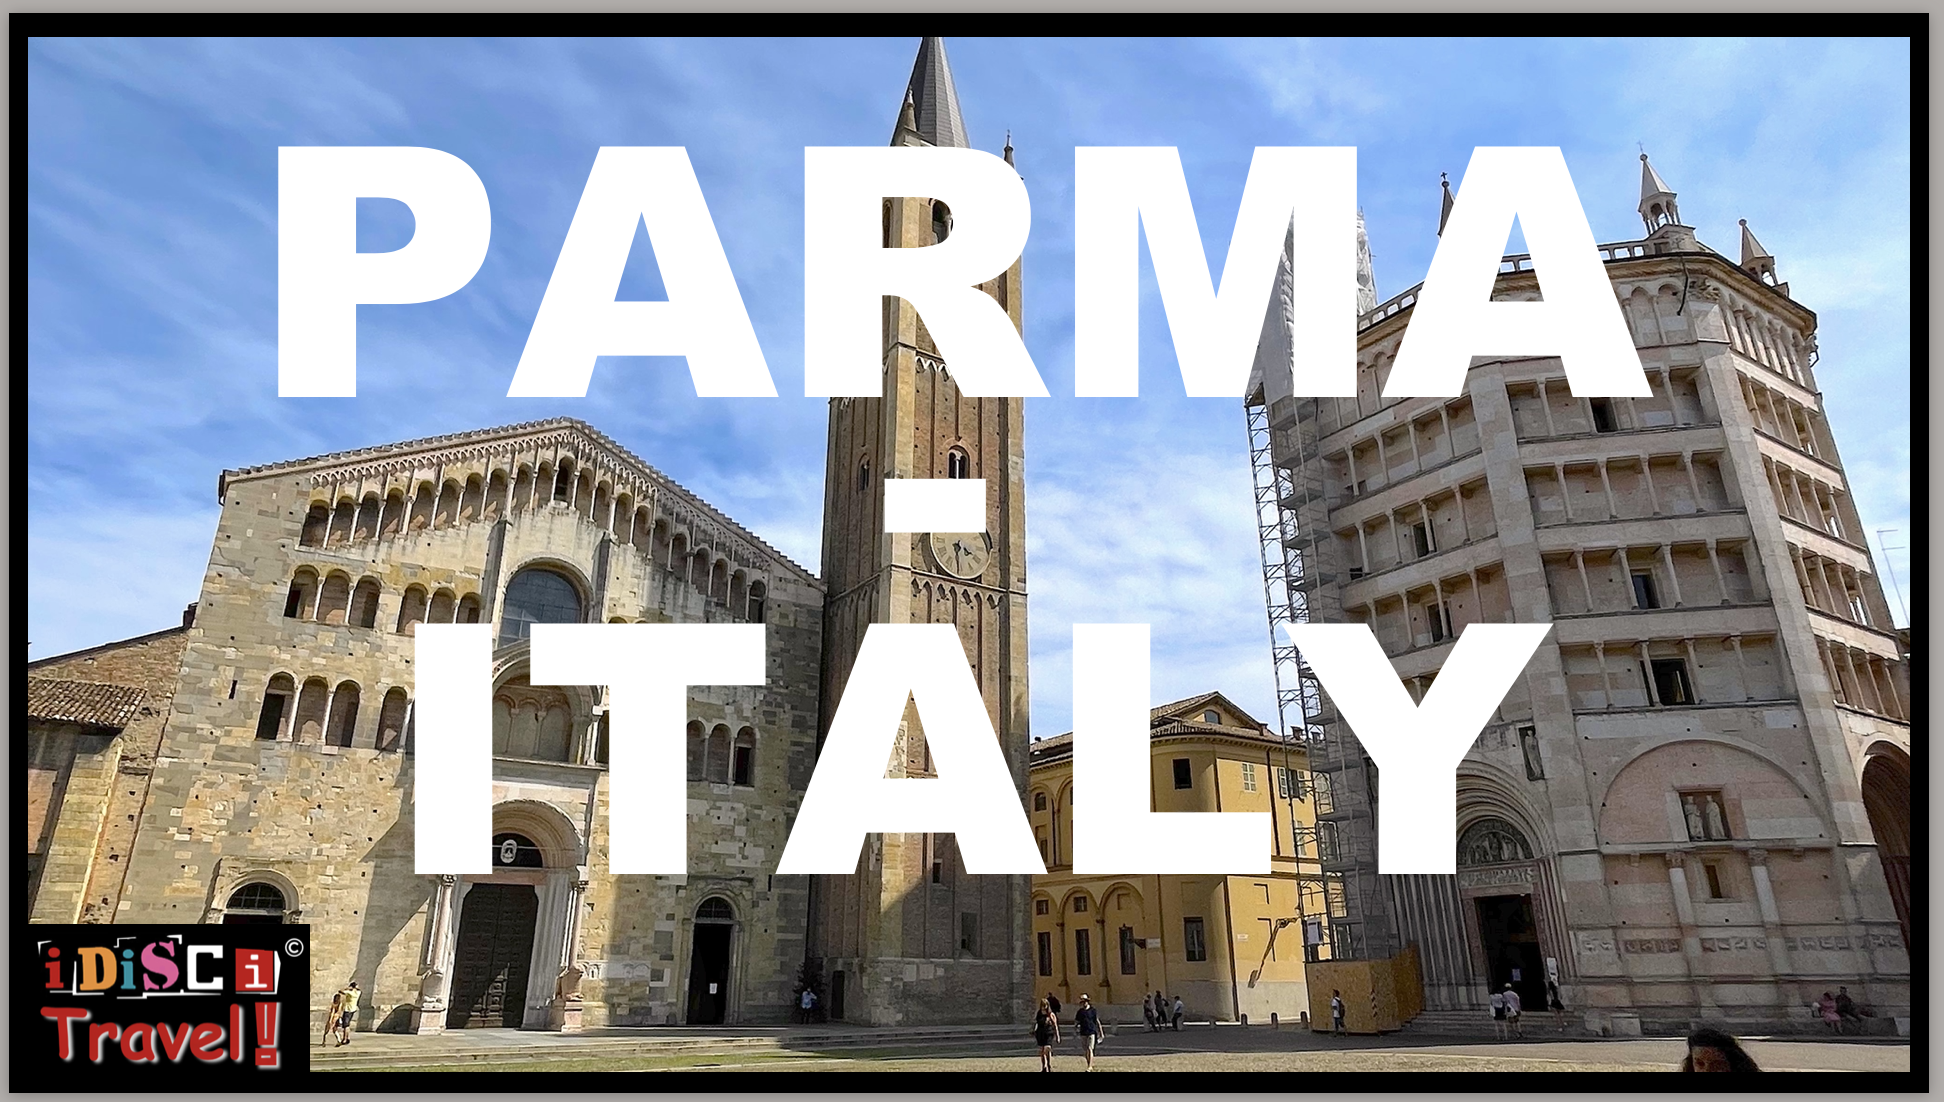 ITALY - PARMA // BEAUTIFULCITY & A MUST SEE!